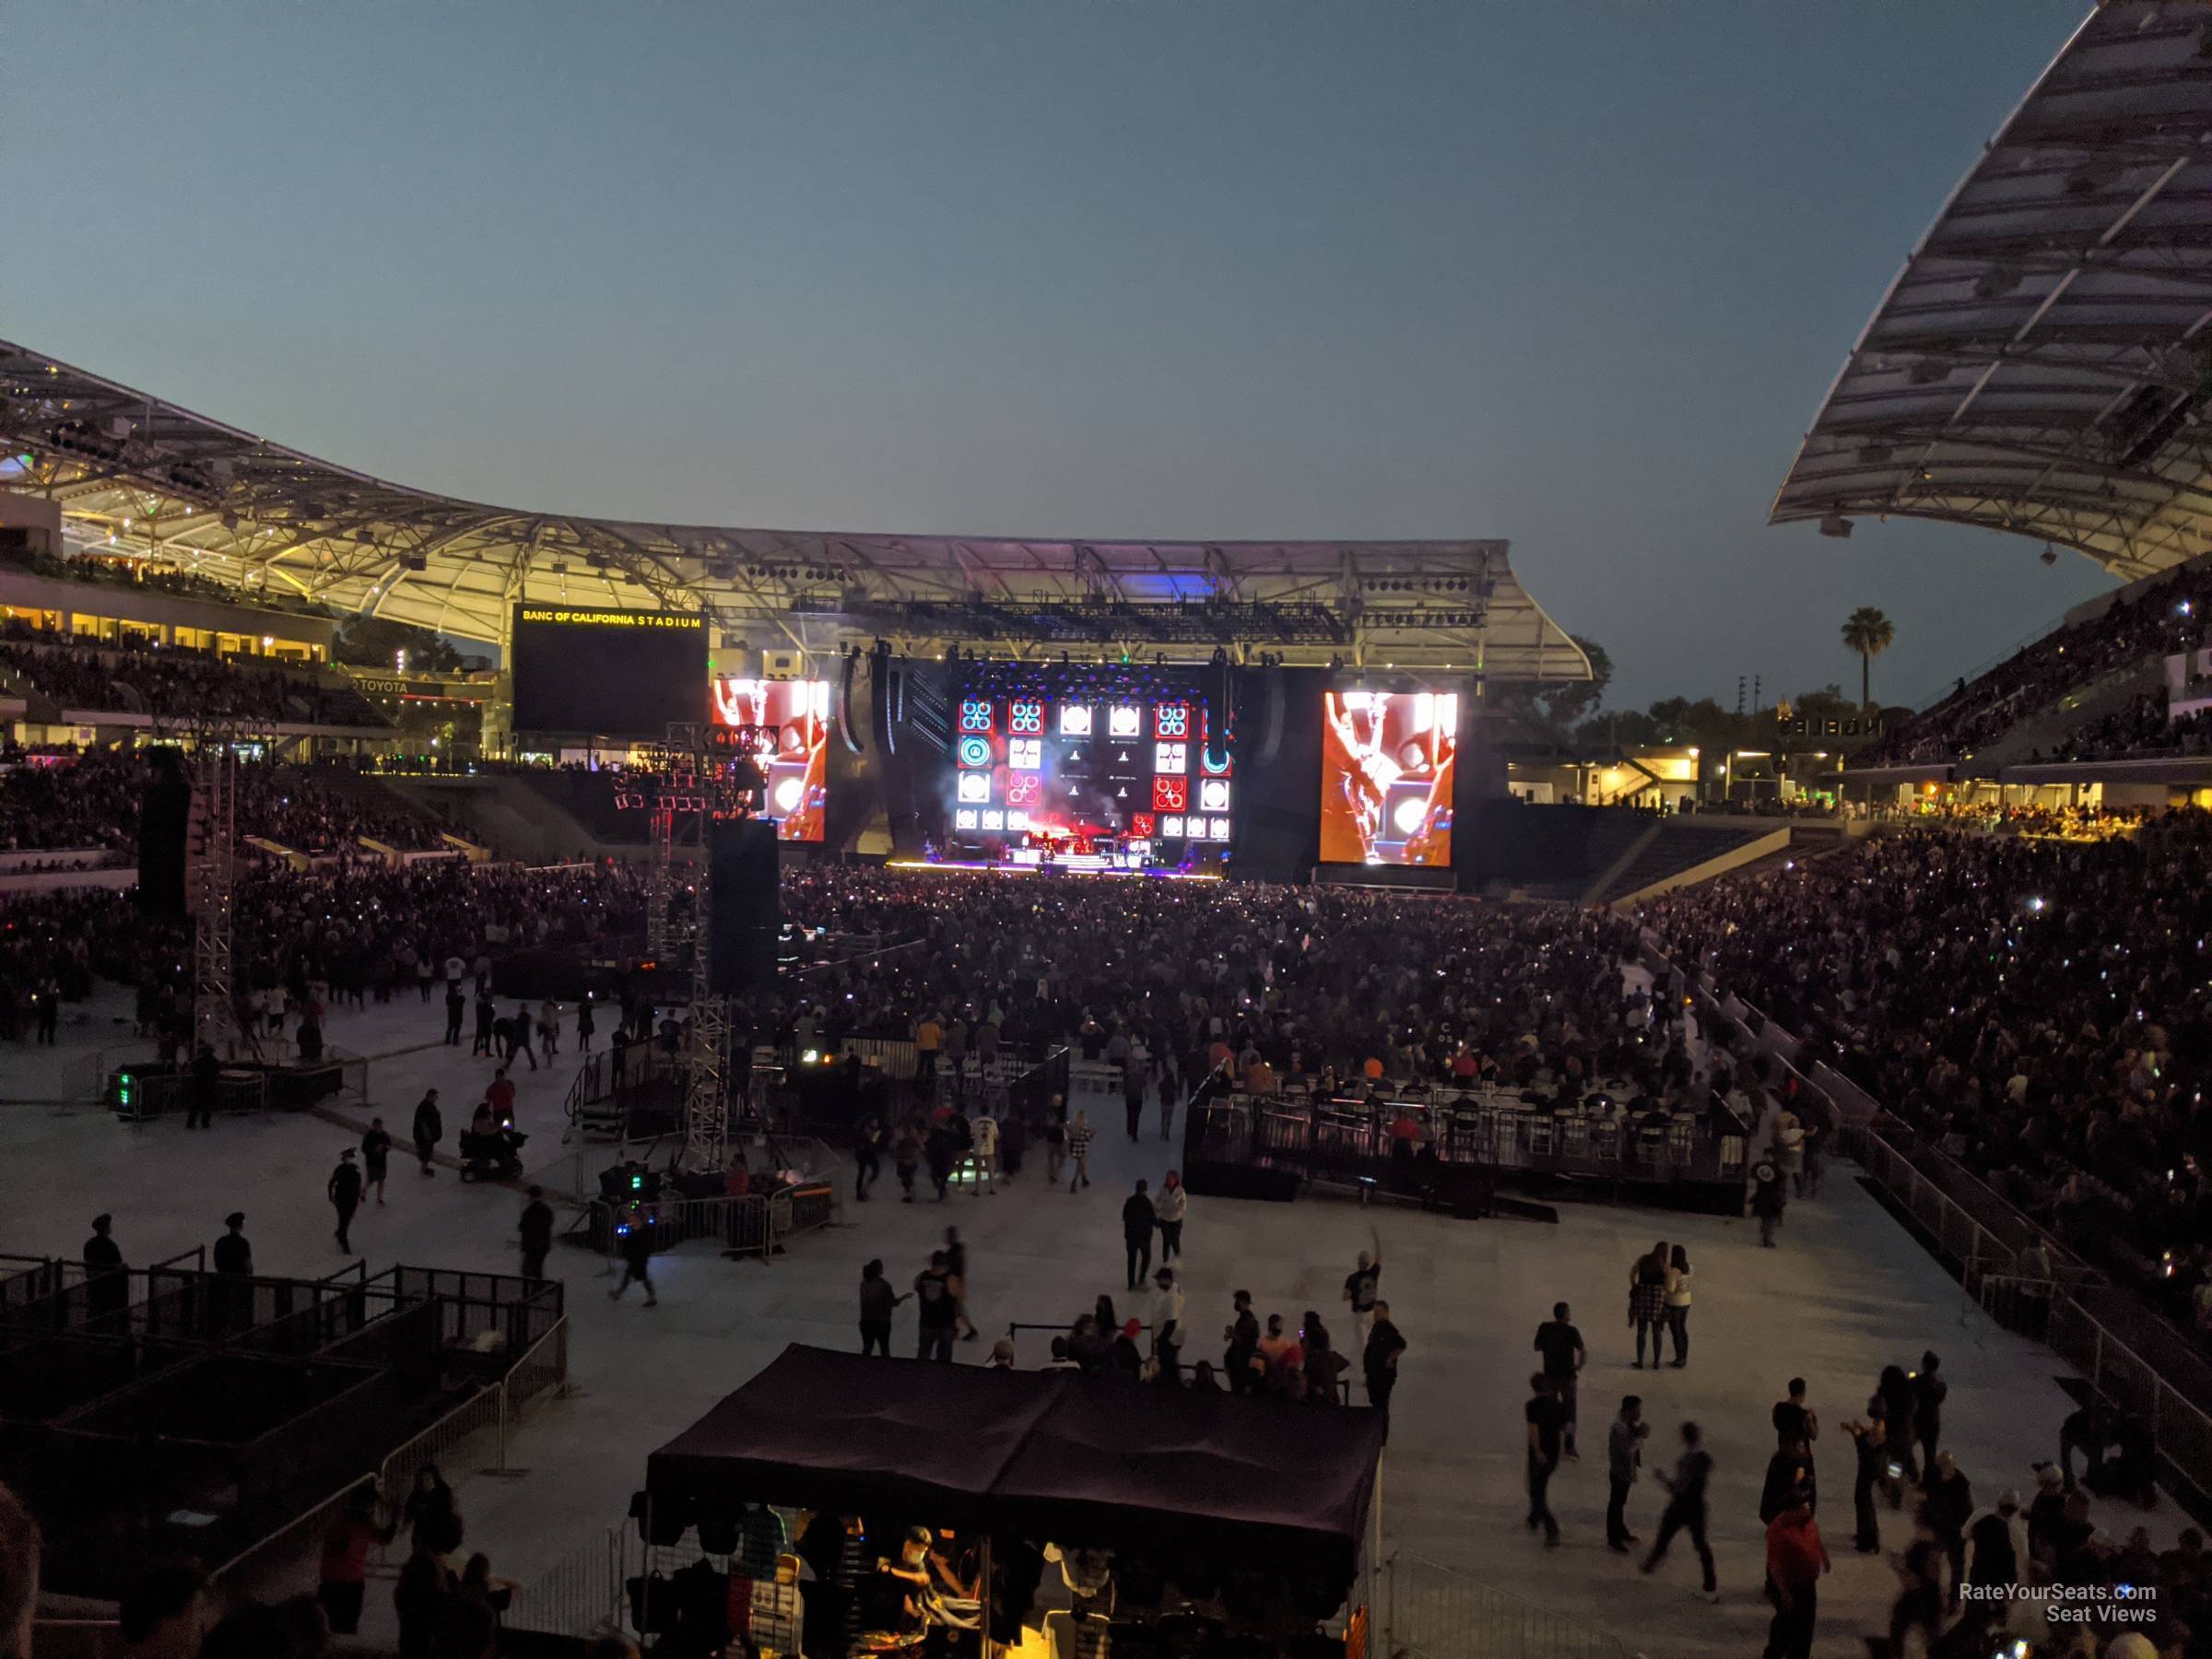 head-on concert view at BMO Stadium